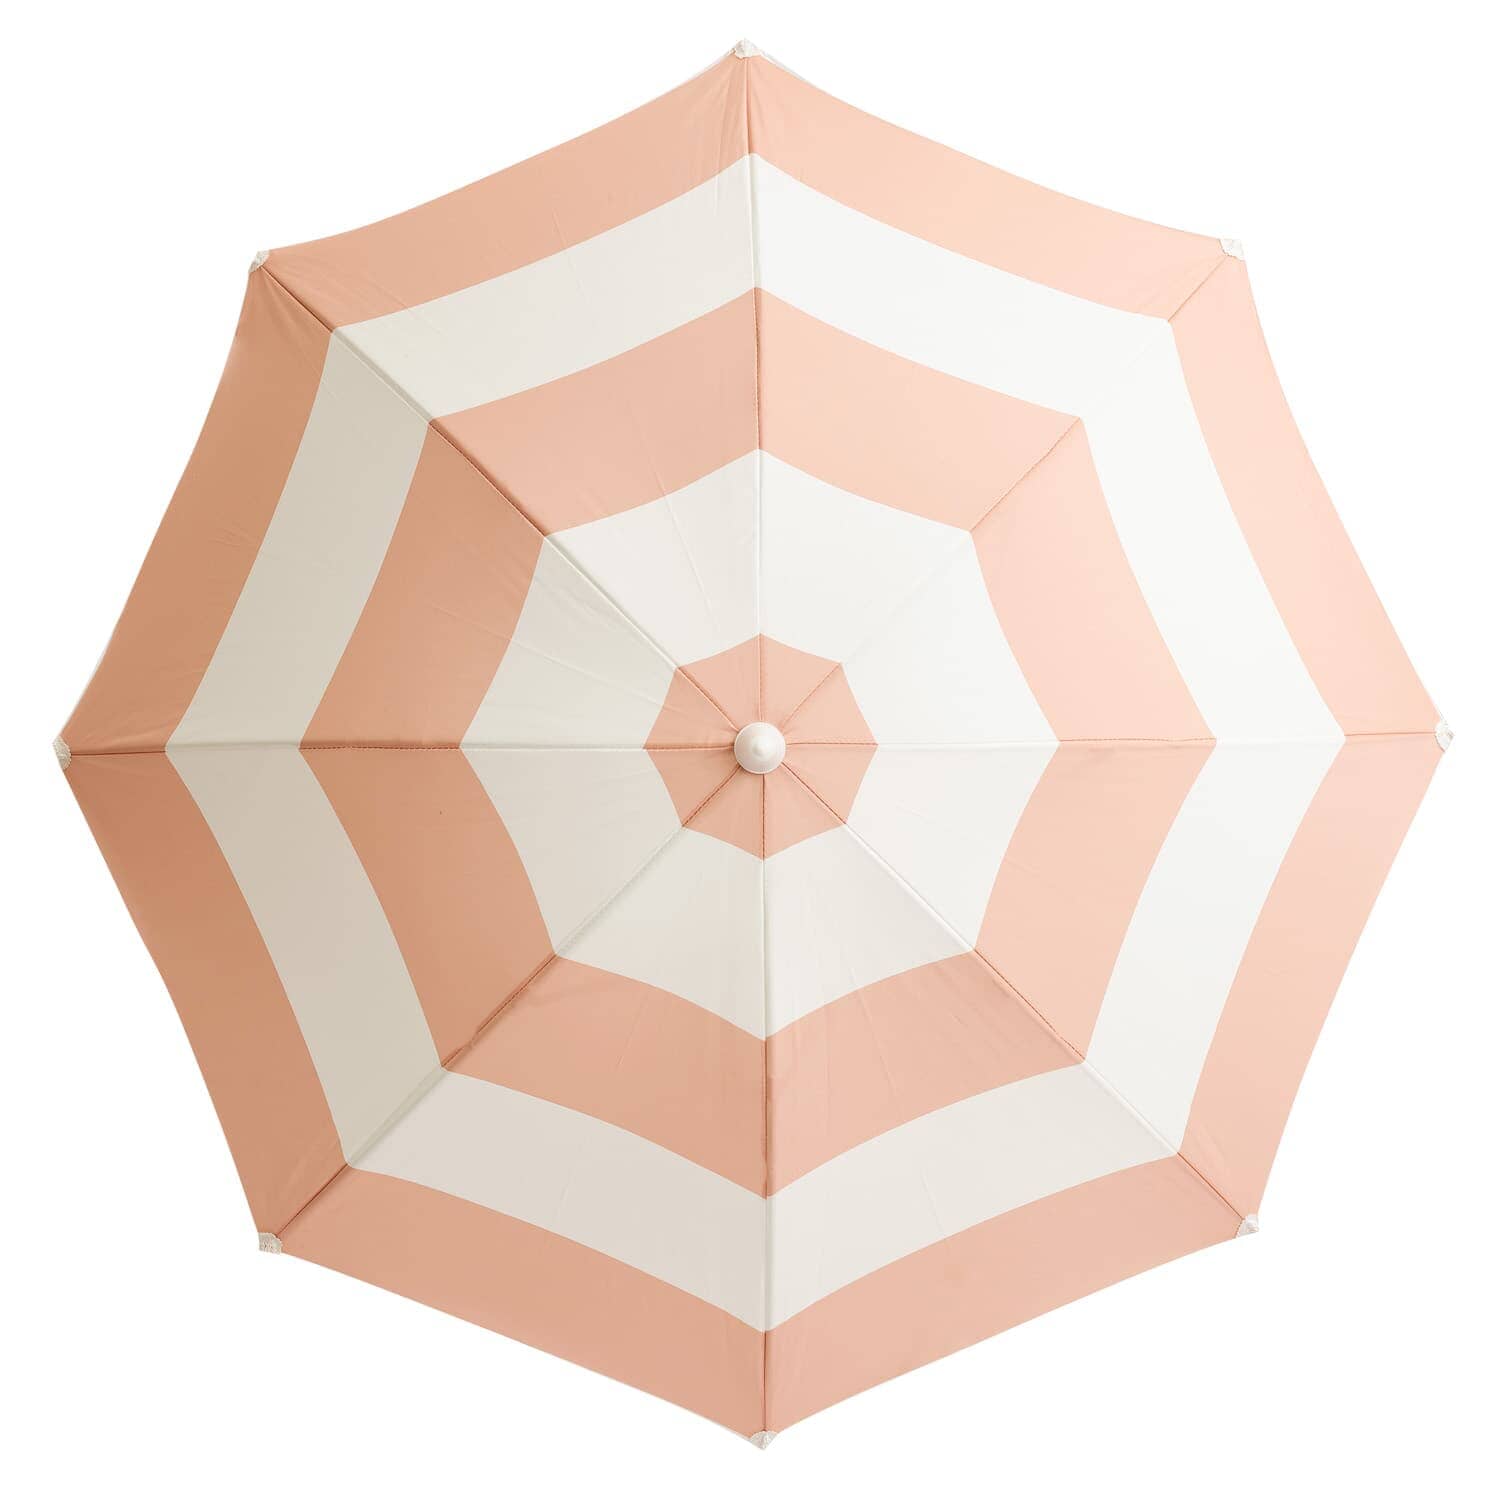 studio image of pink holiday umbrella